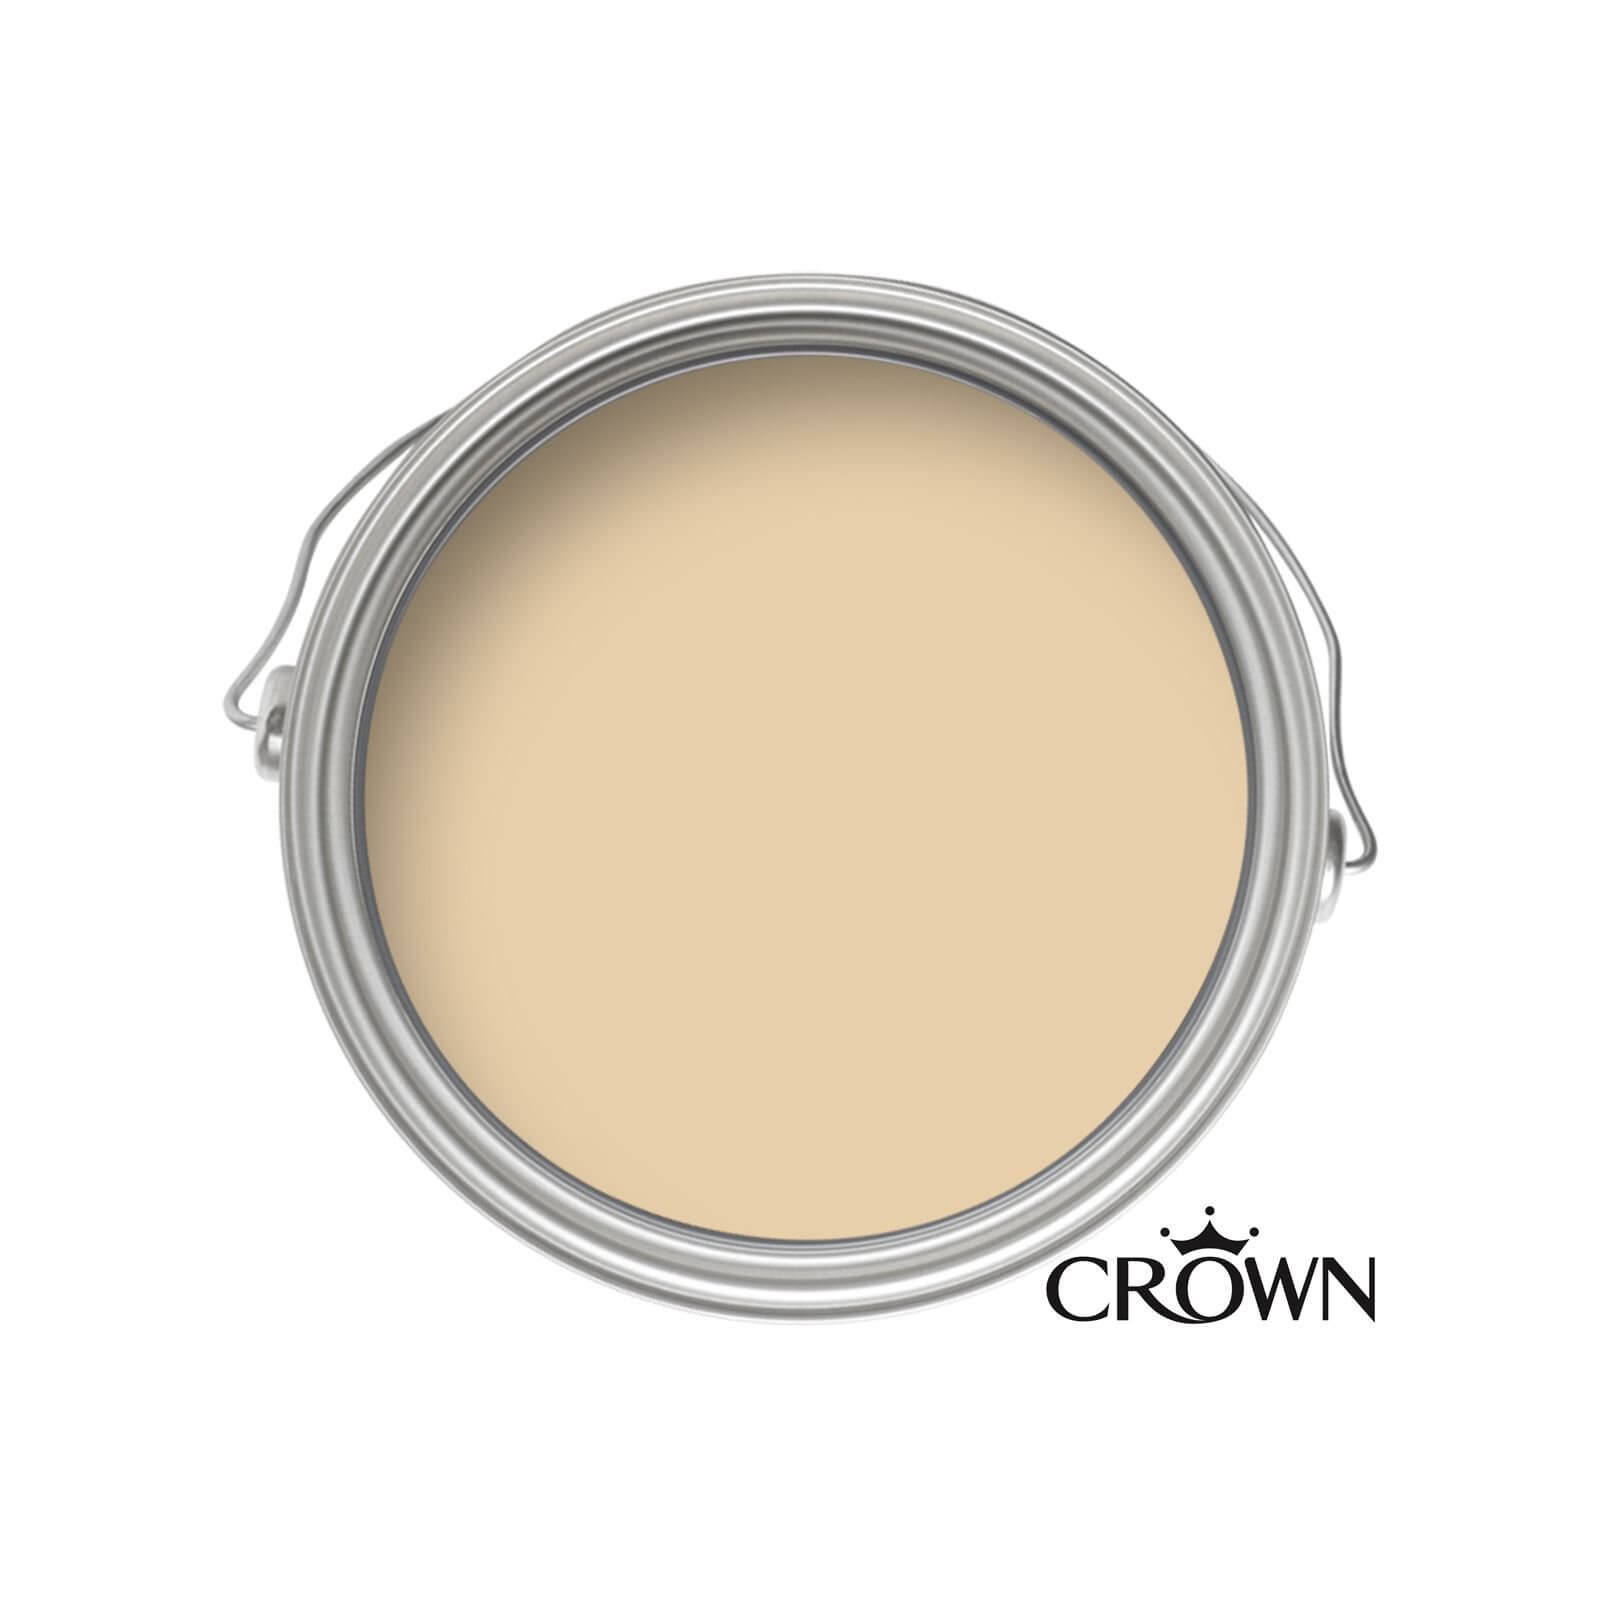 Crown Period Colours Breatheasy Smock - Flat Matt Emulsion Paint - 2.5L